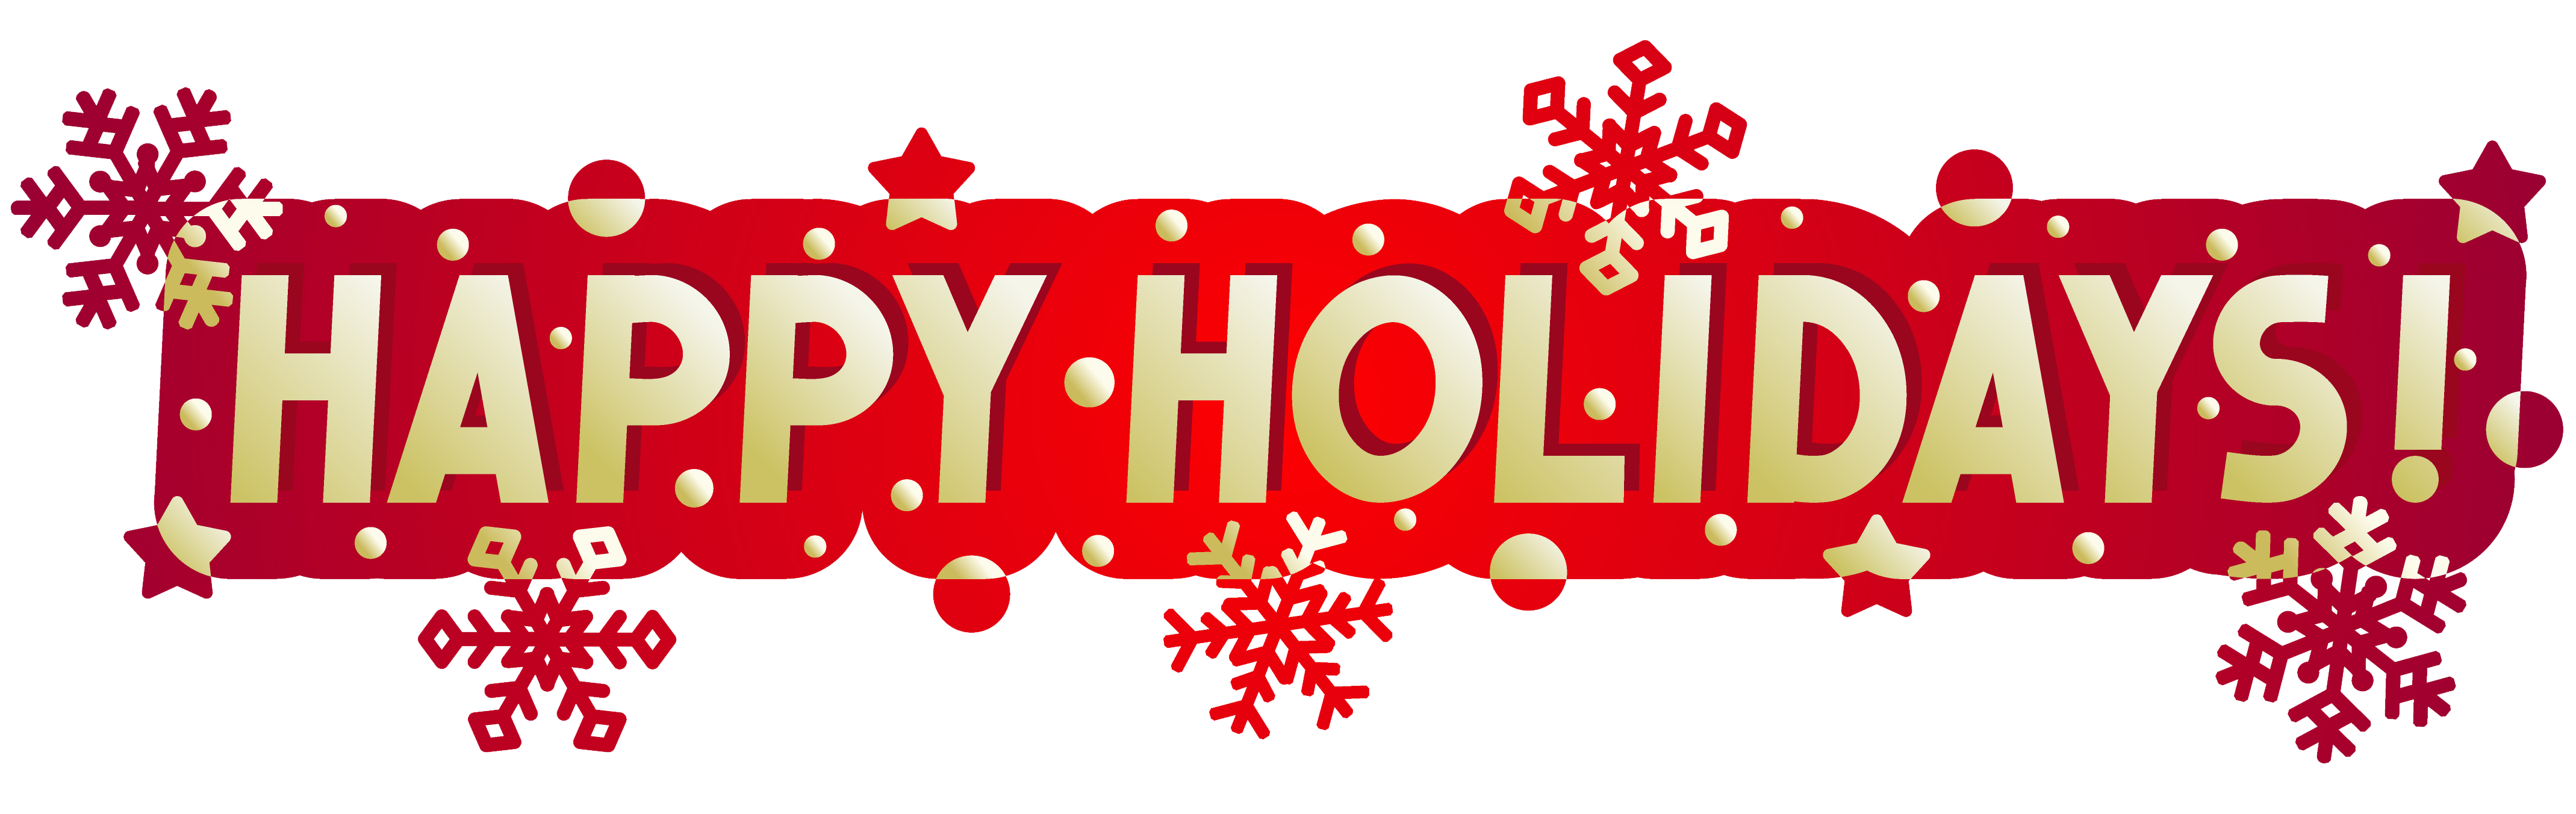 Happy holidays clip art banner 